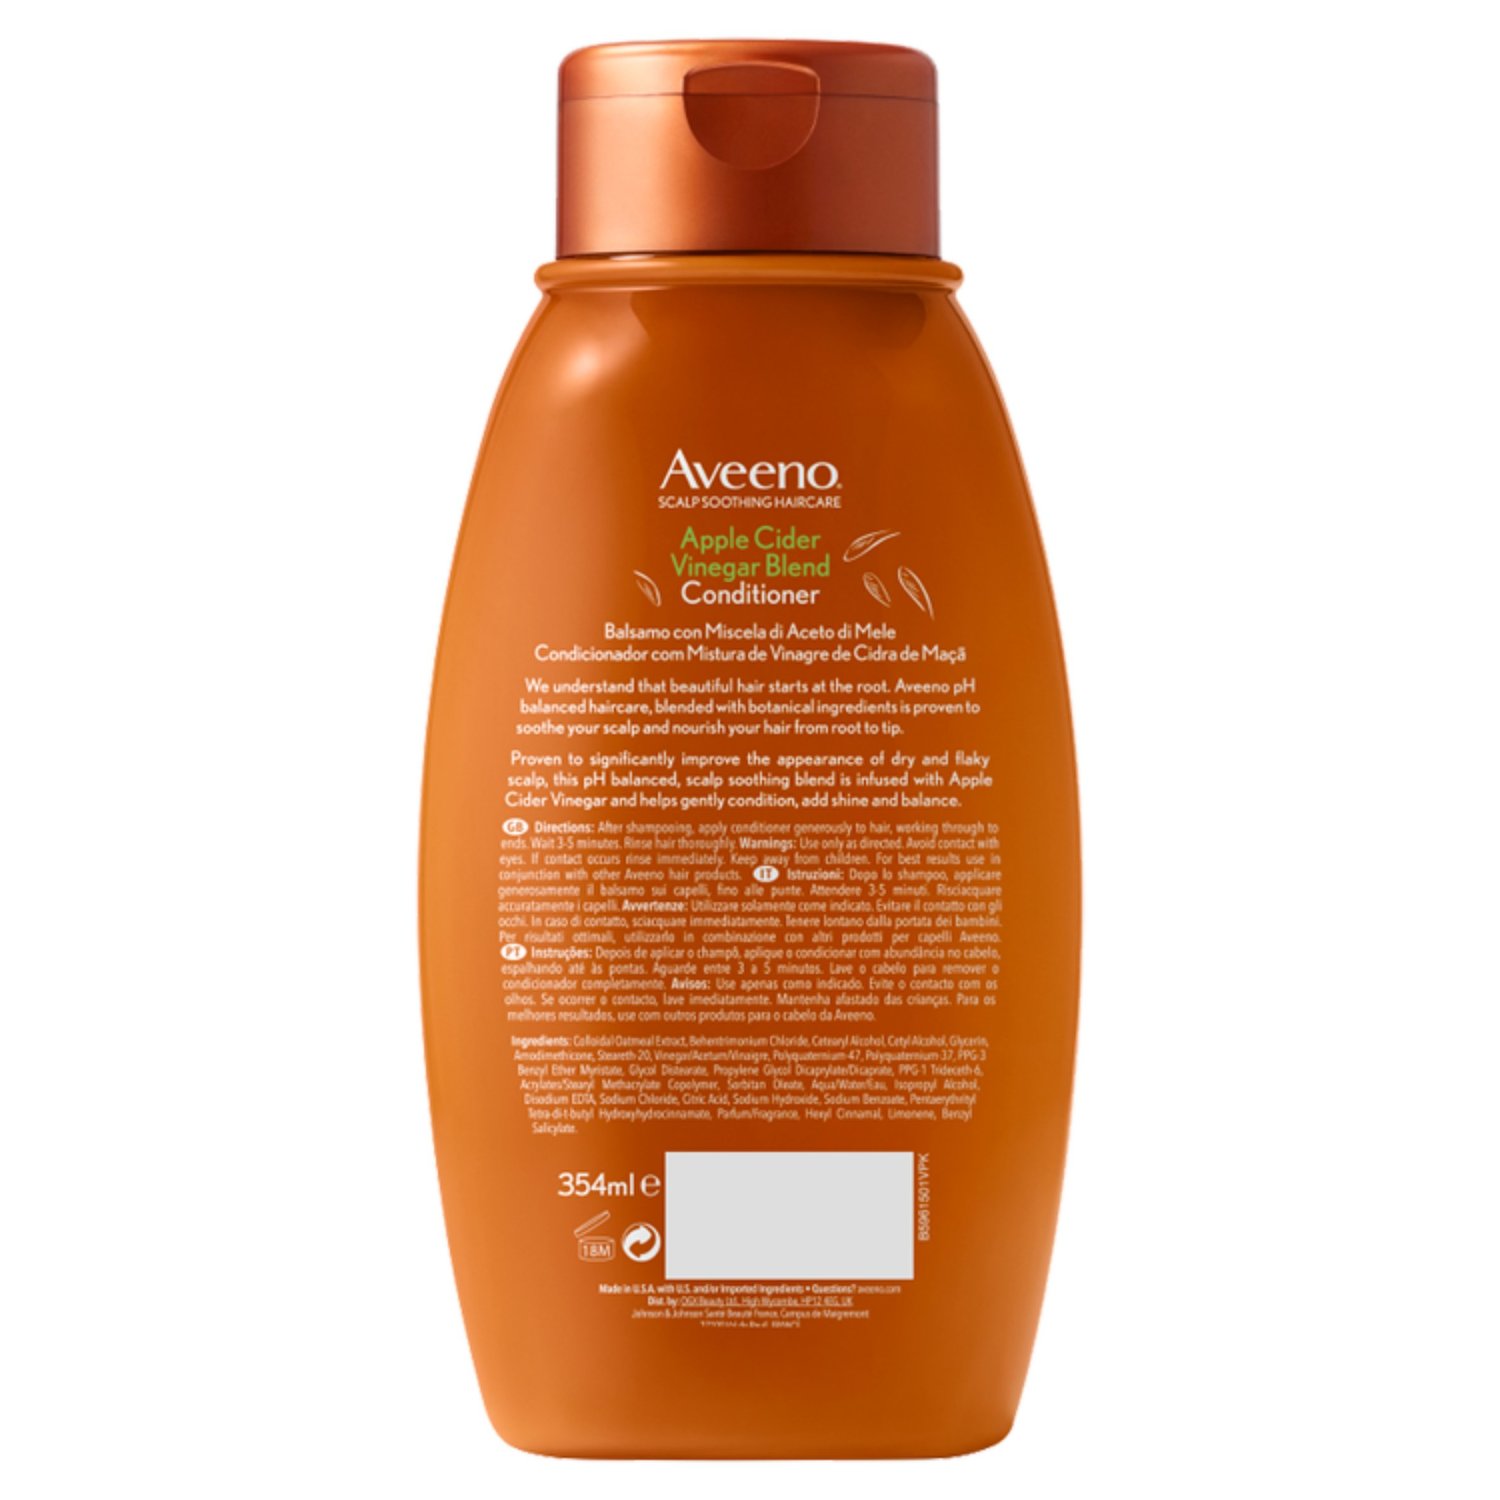 Aveeno Clarify and Shine+ Apple Cider Vinegar Blend Conditioner 354ml